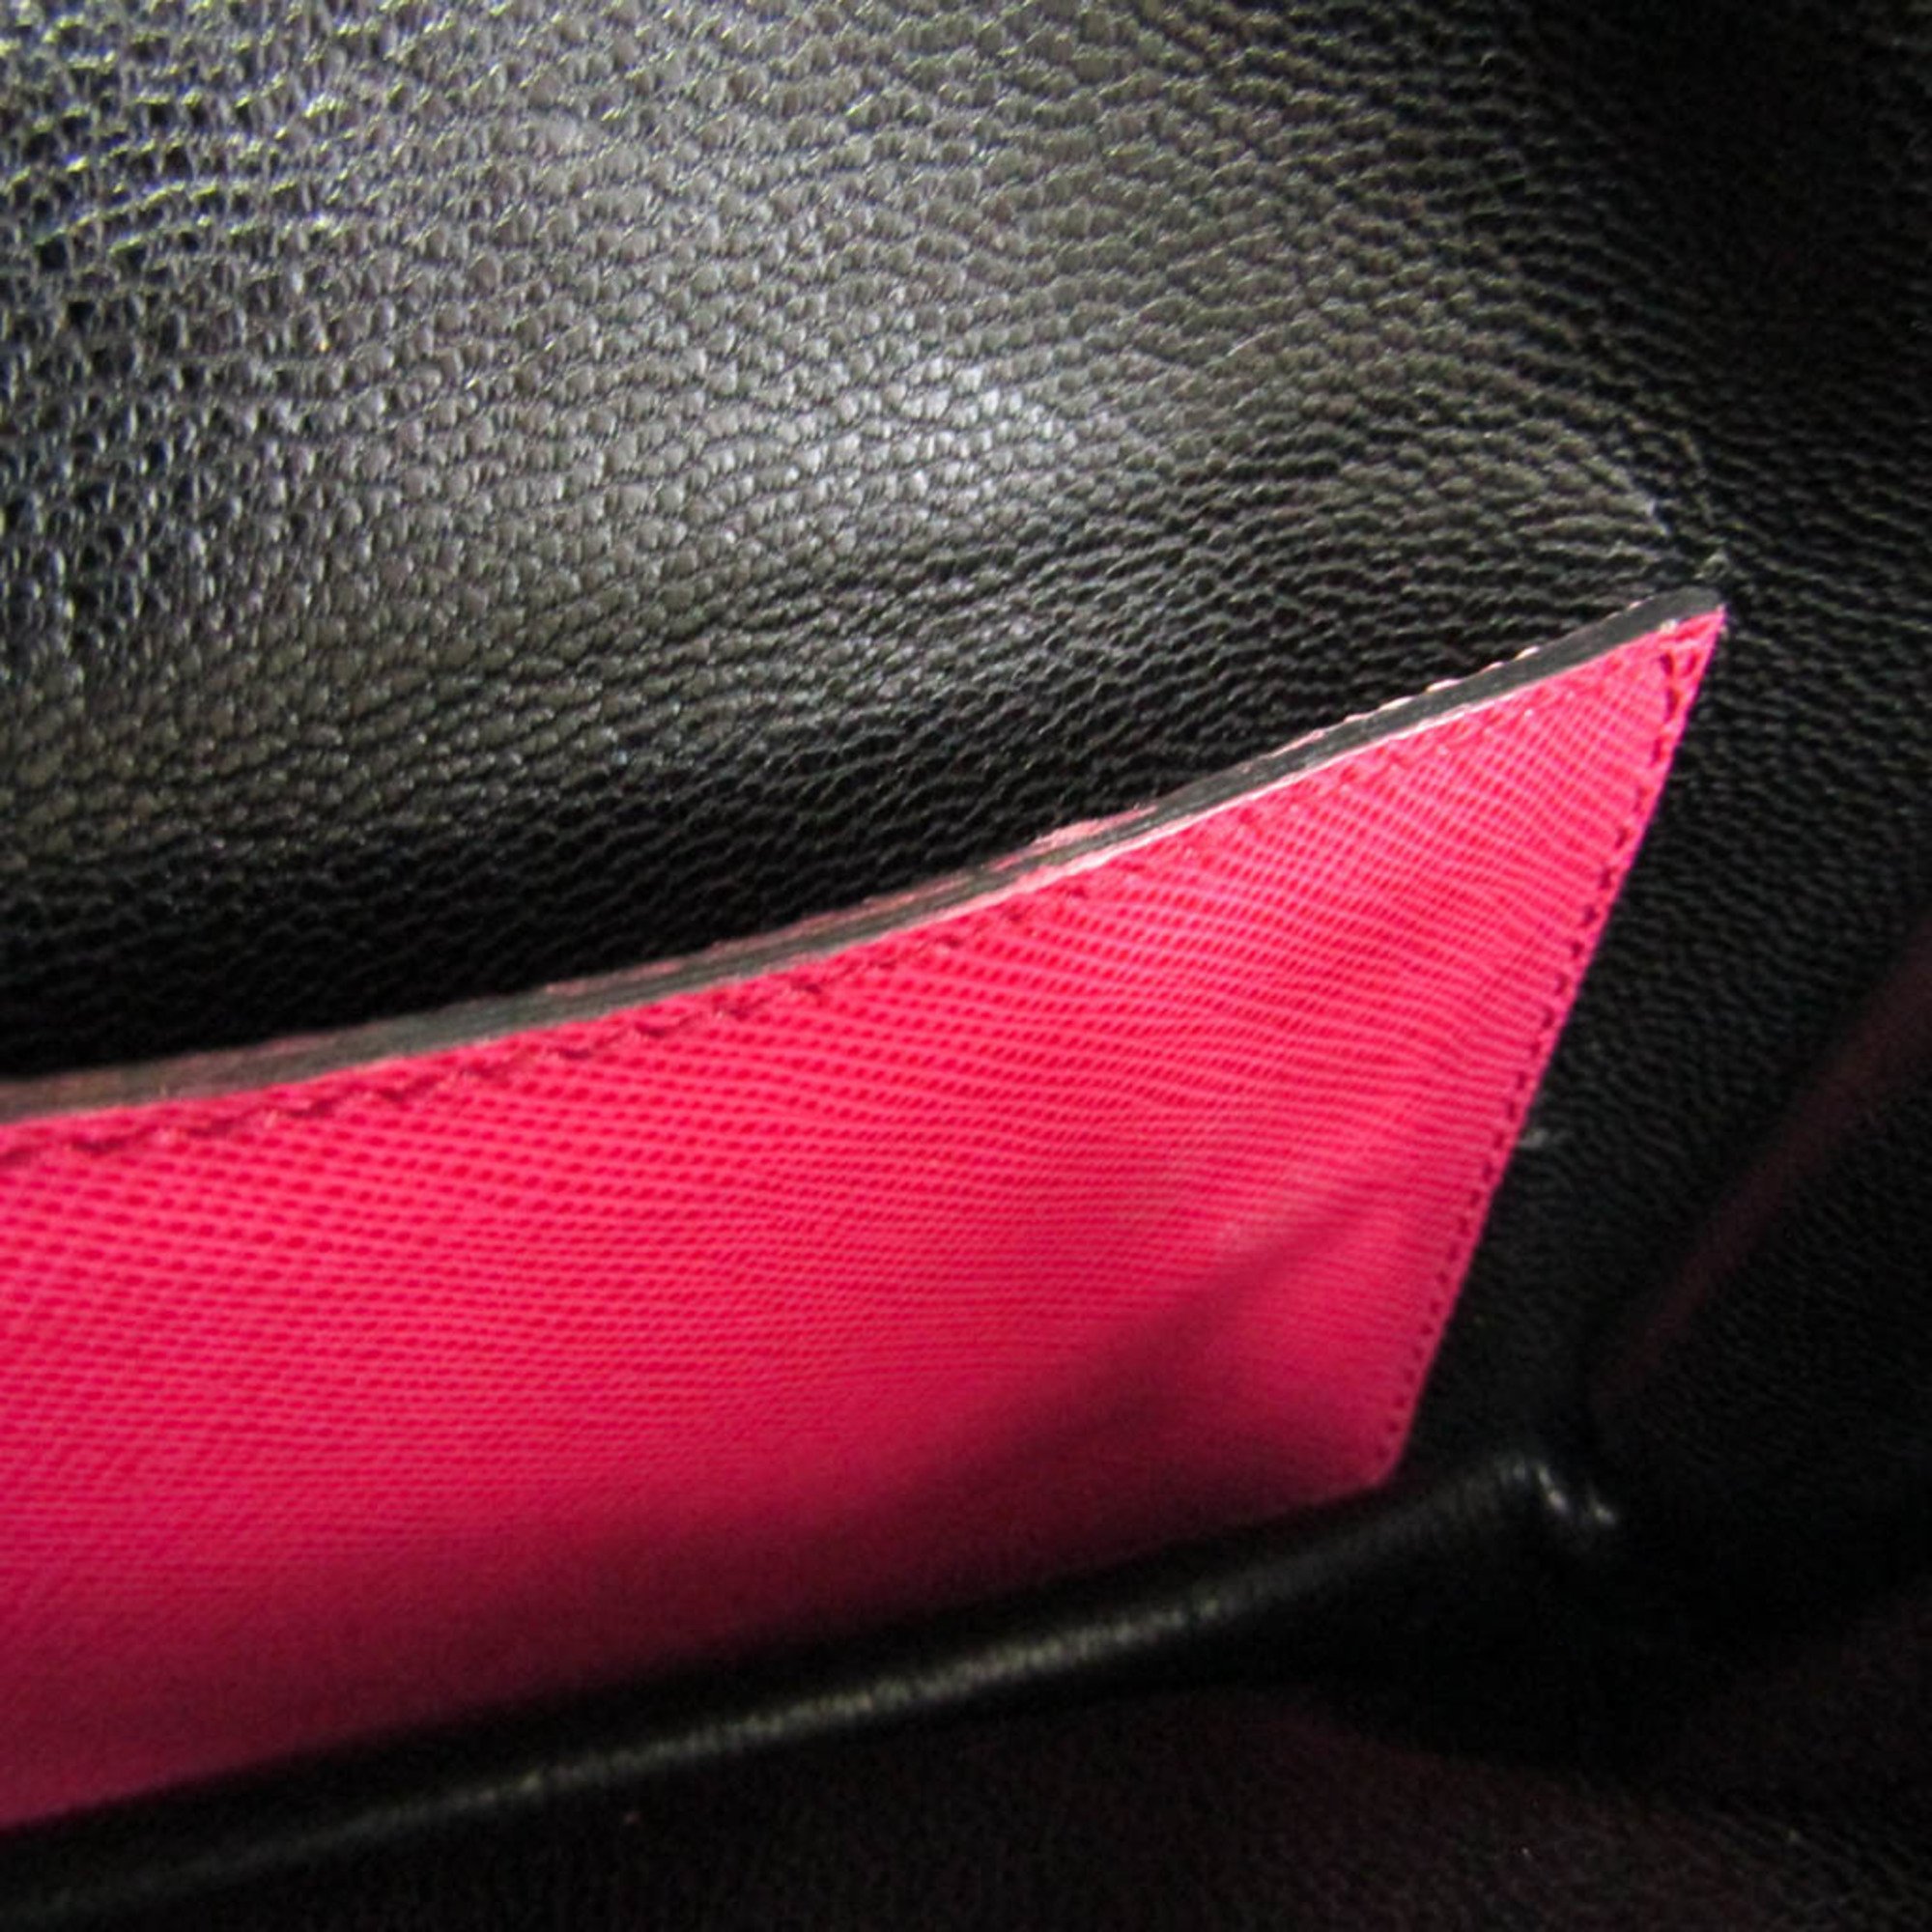 Prada Saffiano Mini Women's Leather Shoulder Bag Pink